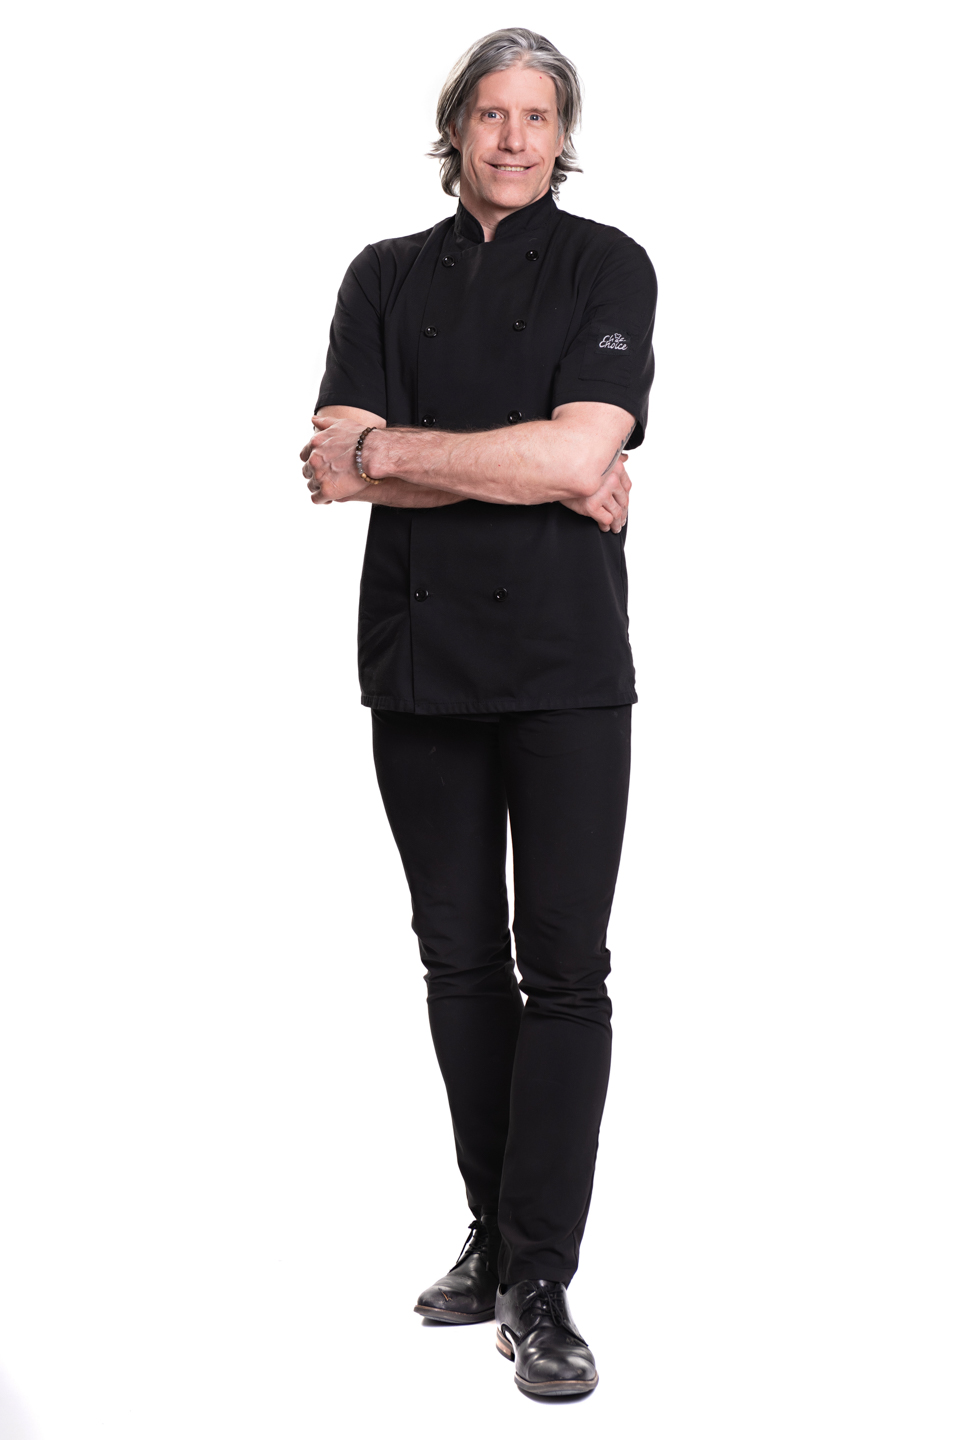 Colorada Chef Traiteur : Pierre